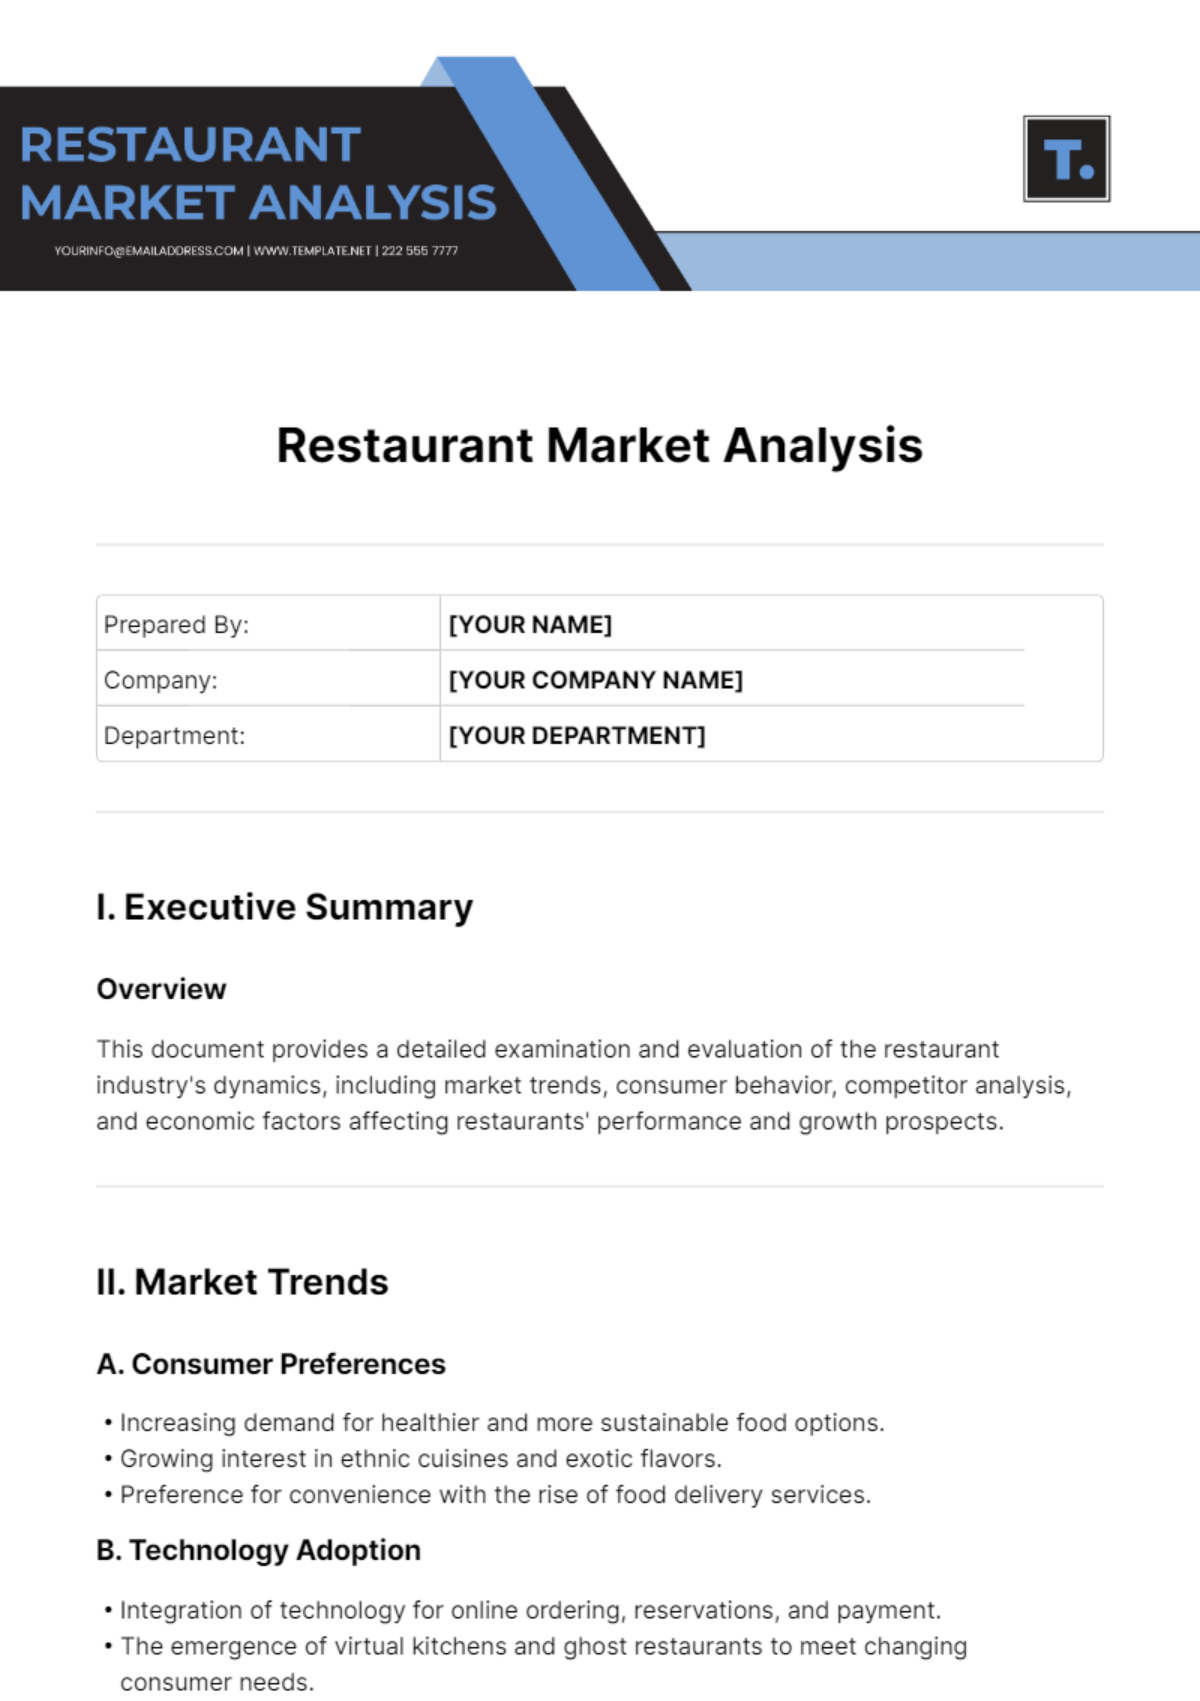 Restaurant Market Analysis Template